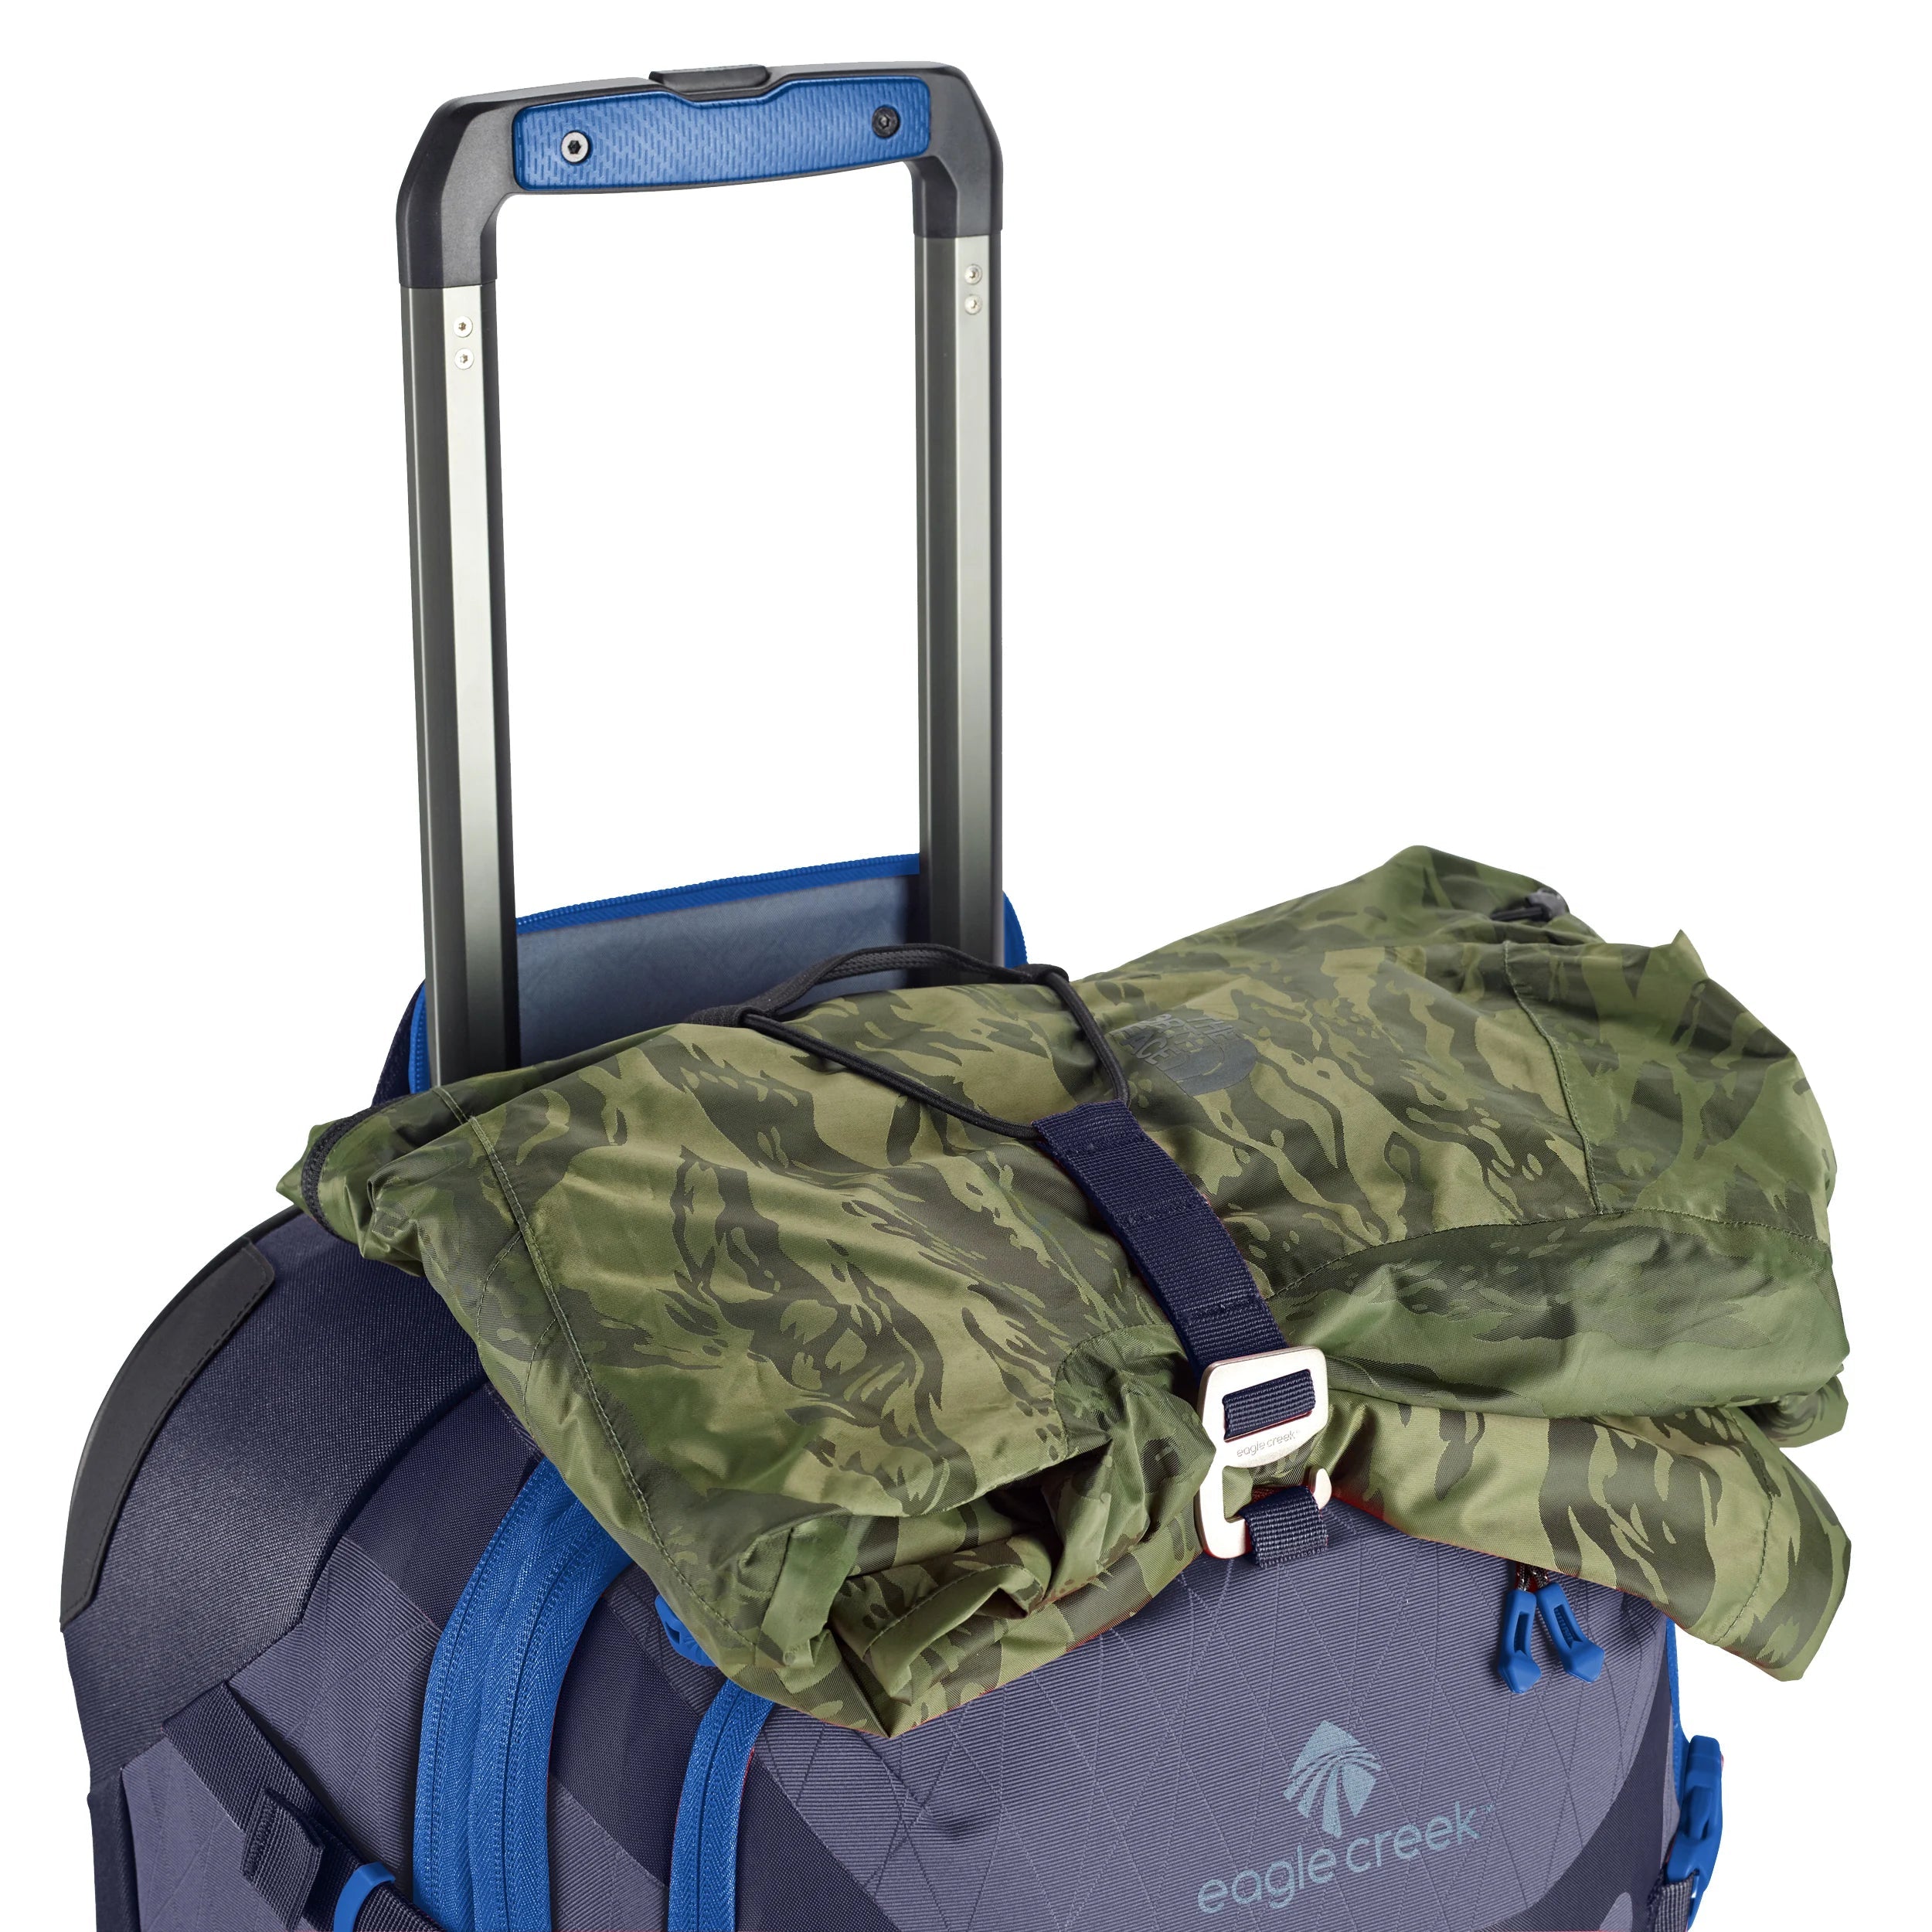 Eagle Creek Outdoor Gear Gear Warrior Rolling Travel Bag 56 cm - arctic blue